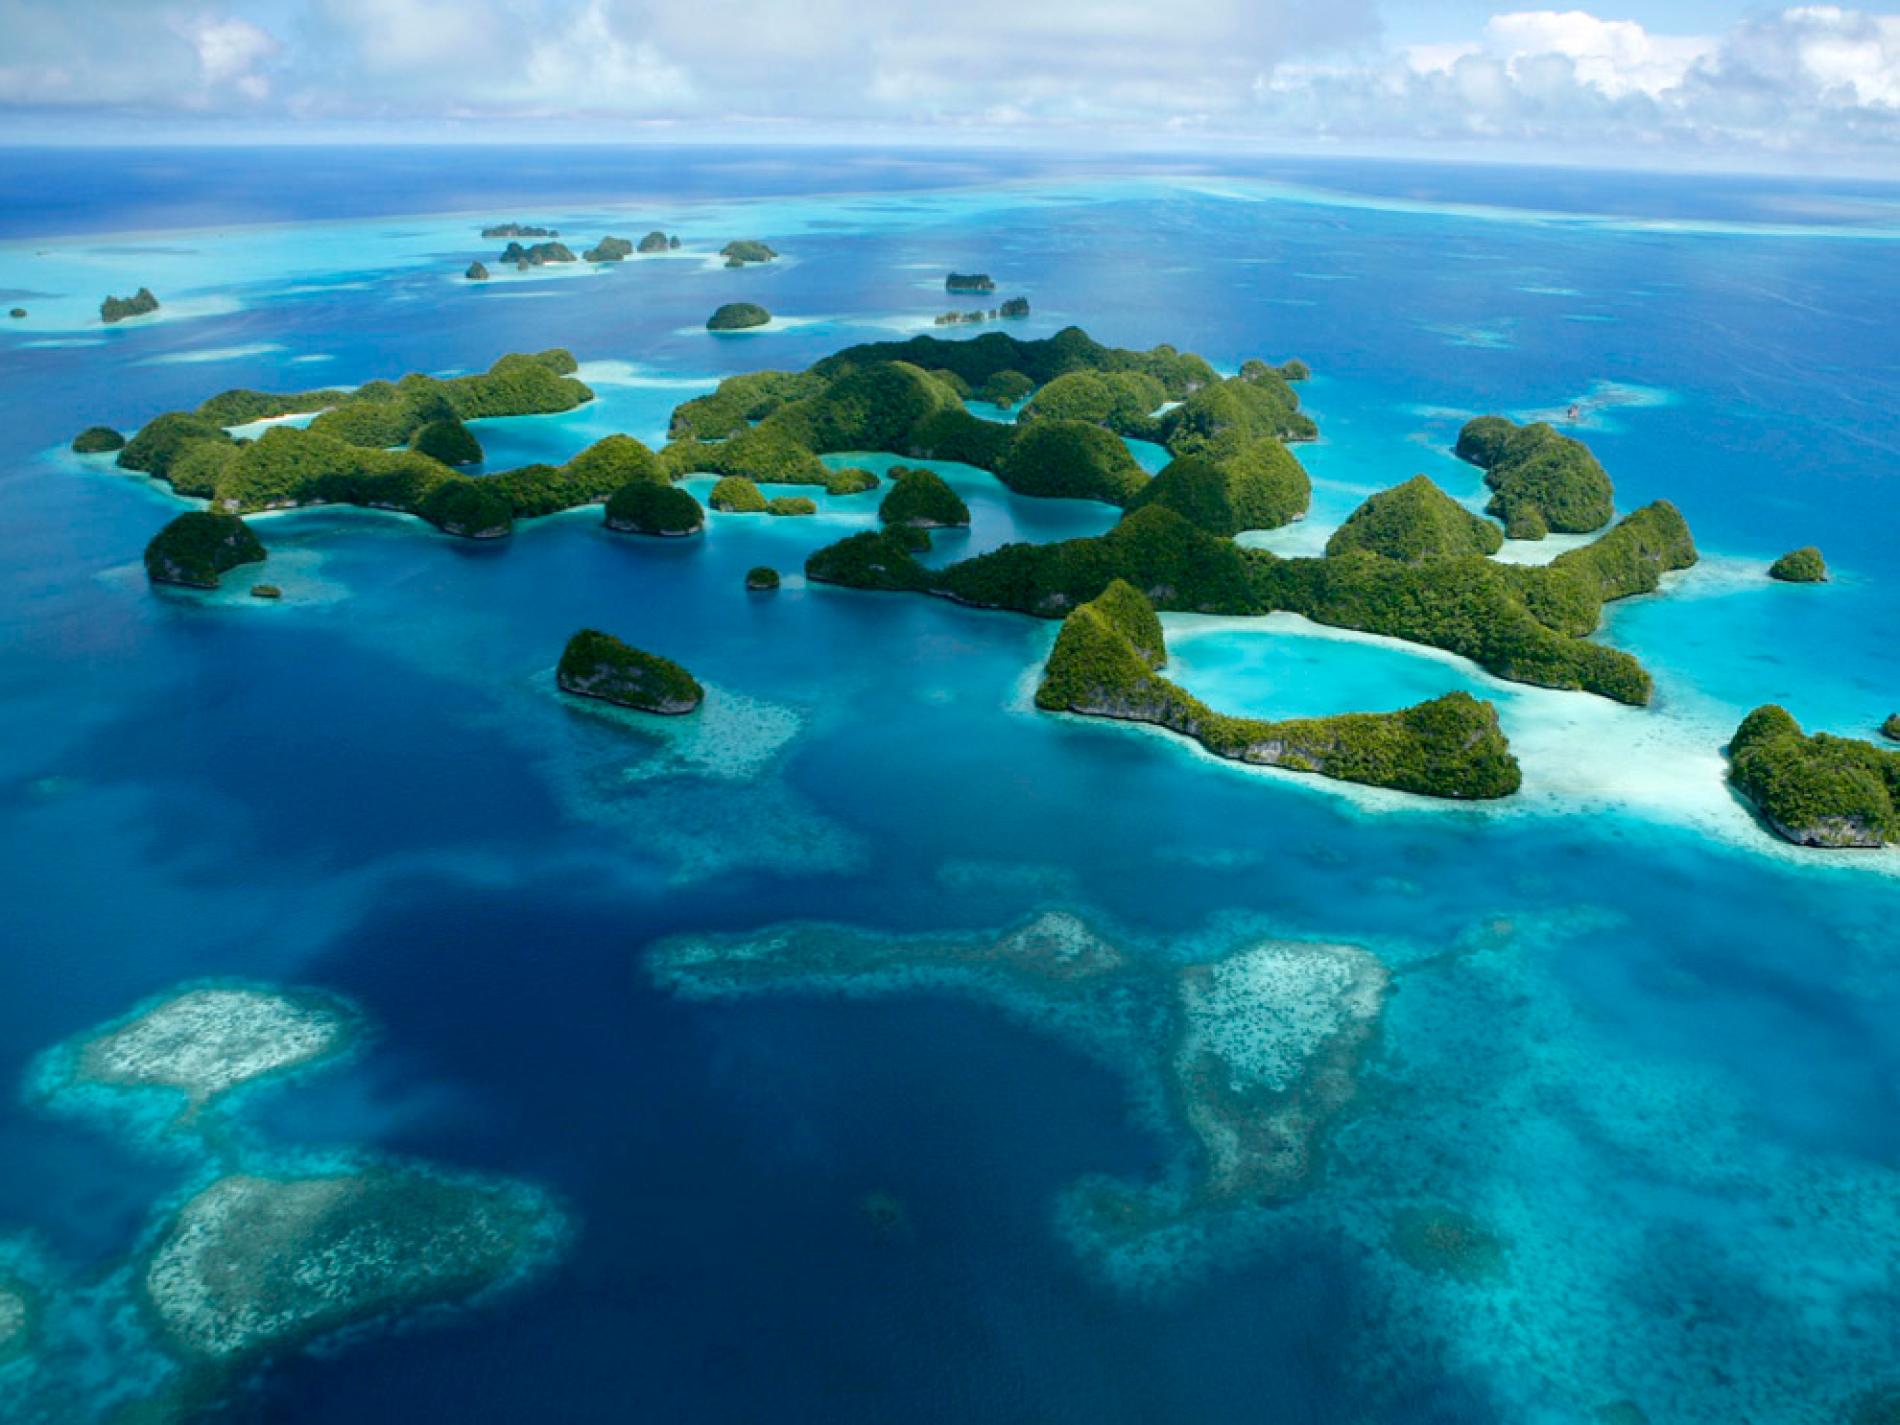 Palau, Micronesia - Sept 27-Oct 4, 2019